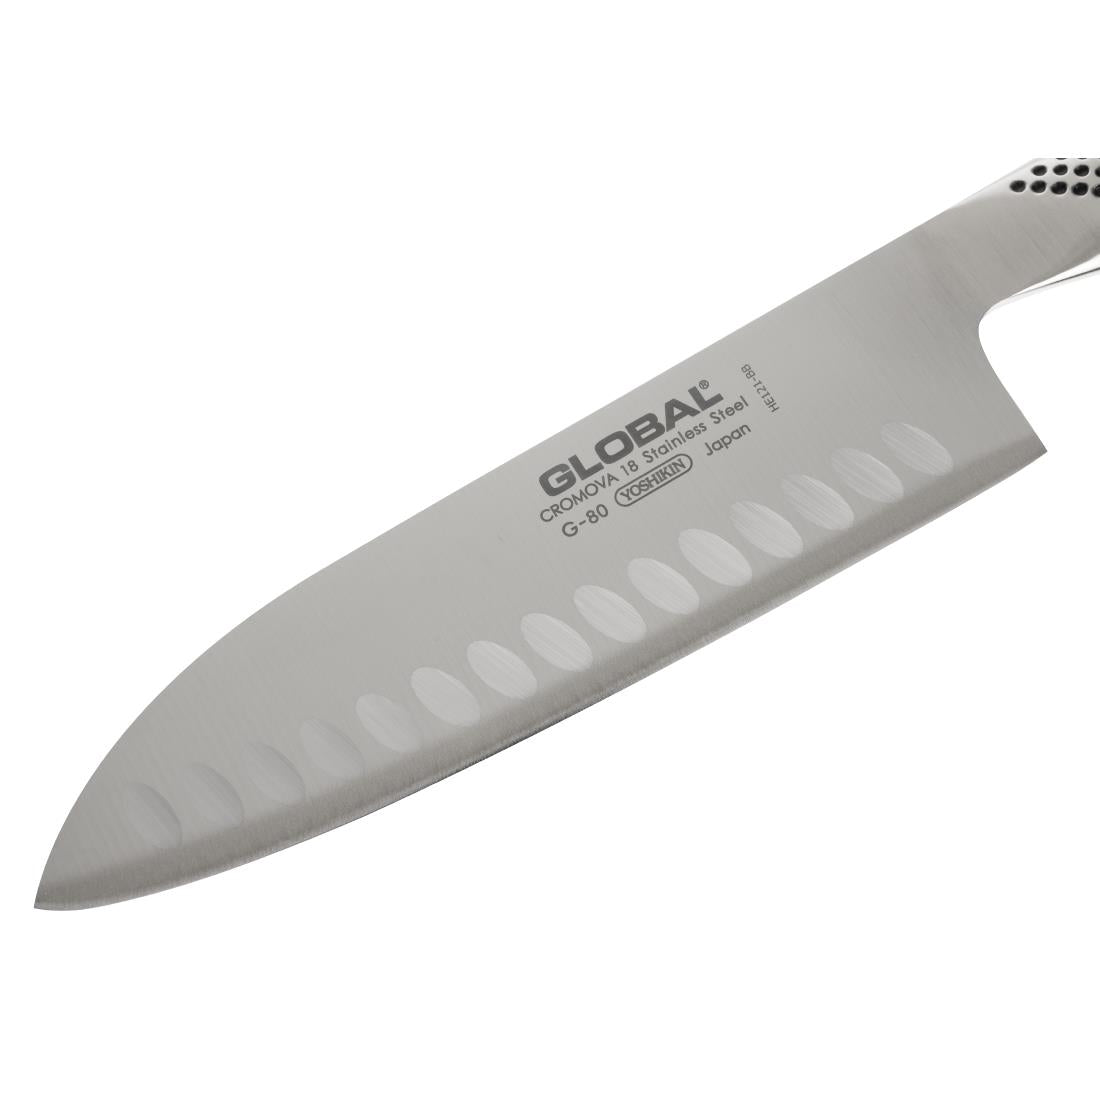 GH281 Global G 48 Santoku Fluted Knife 18cm JD Catering Equipment Solutions Ltd